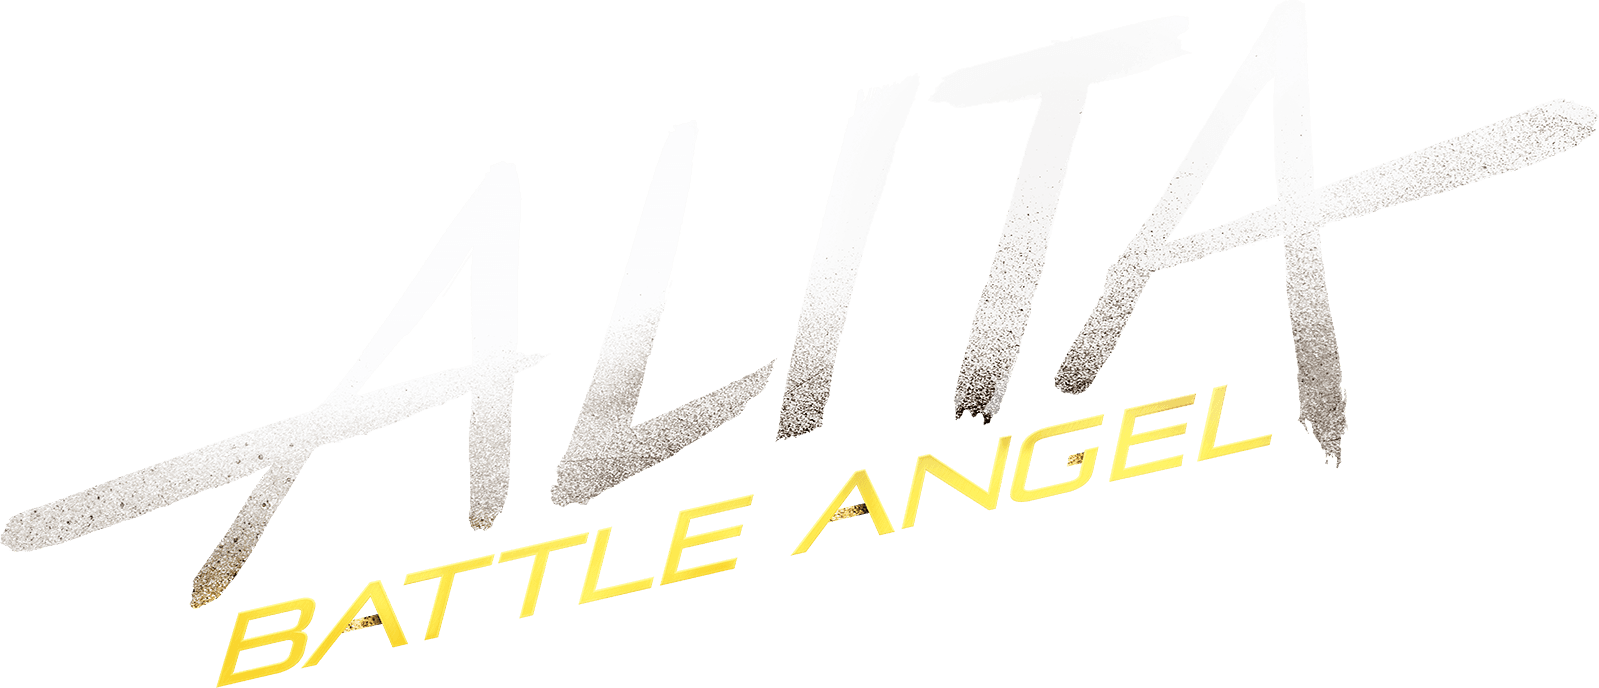 Alita: Battle Angel logo